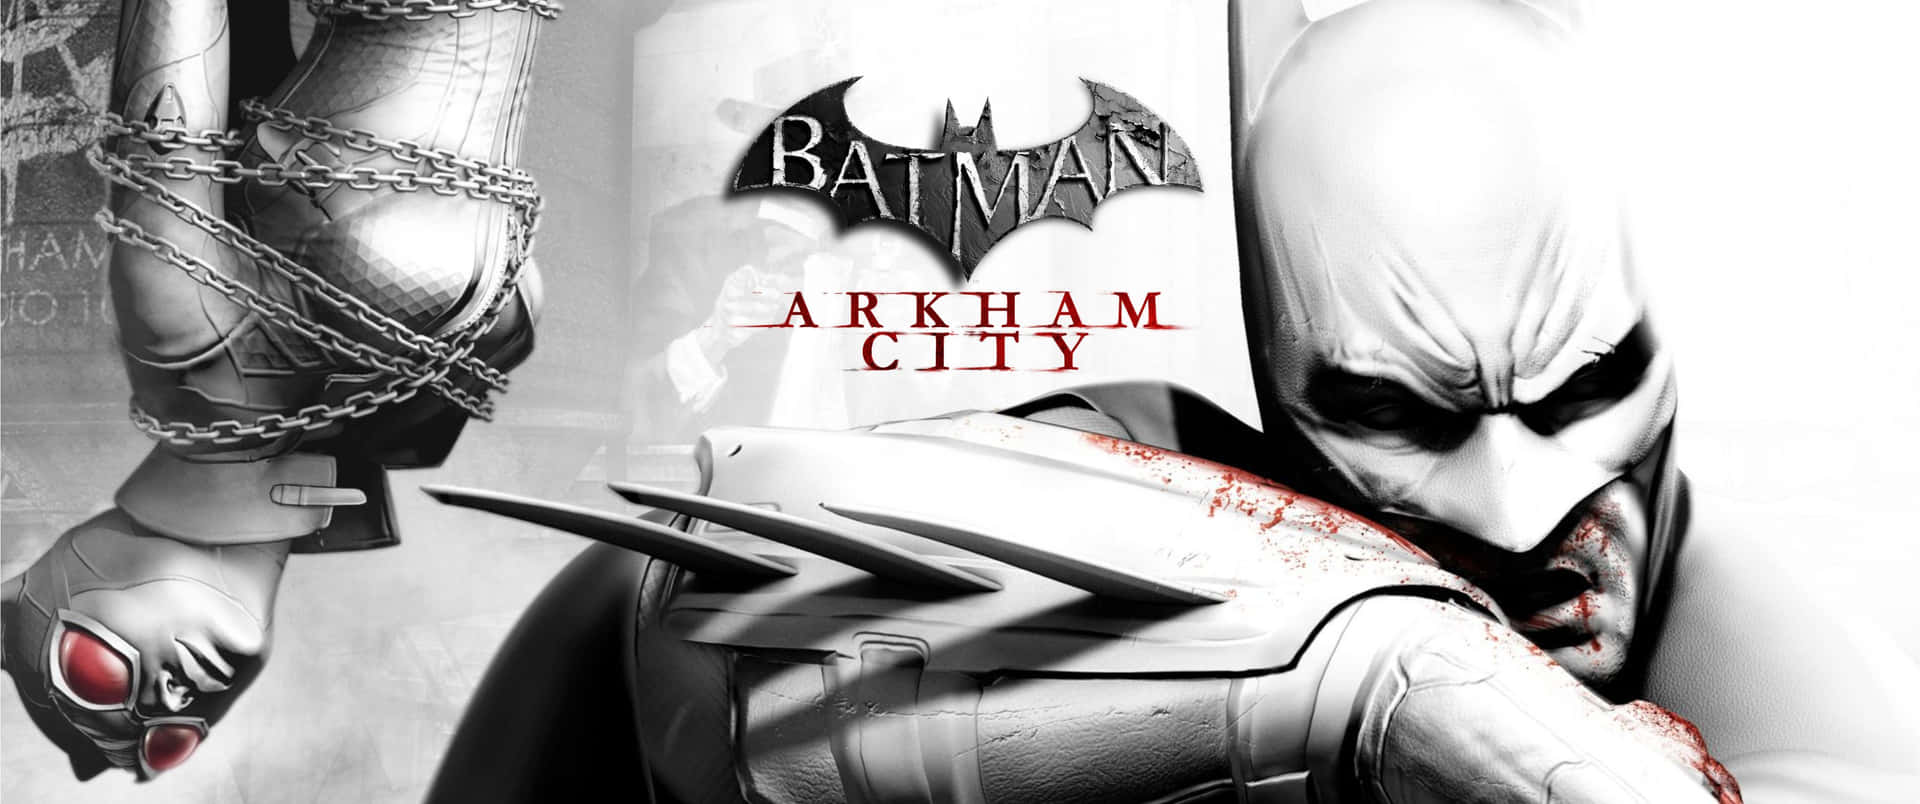 Protegegotham City Con El Caballero Oscuro: Batman En Arkham City